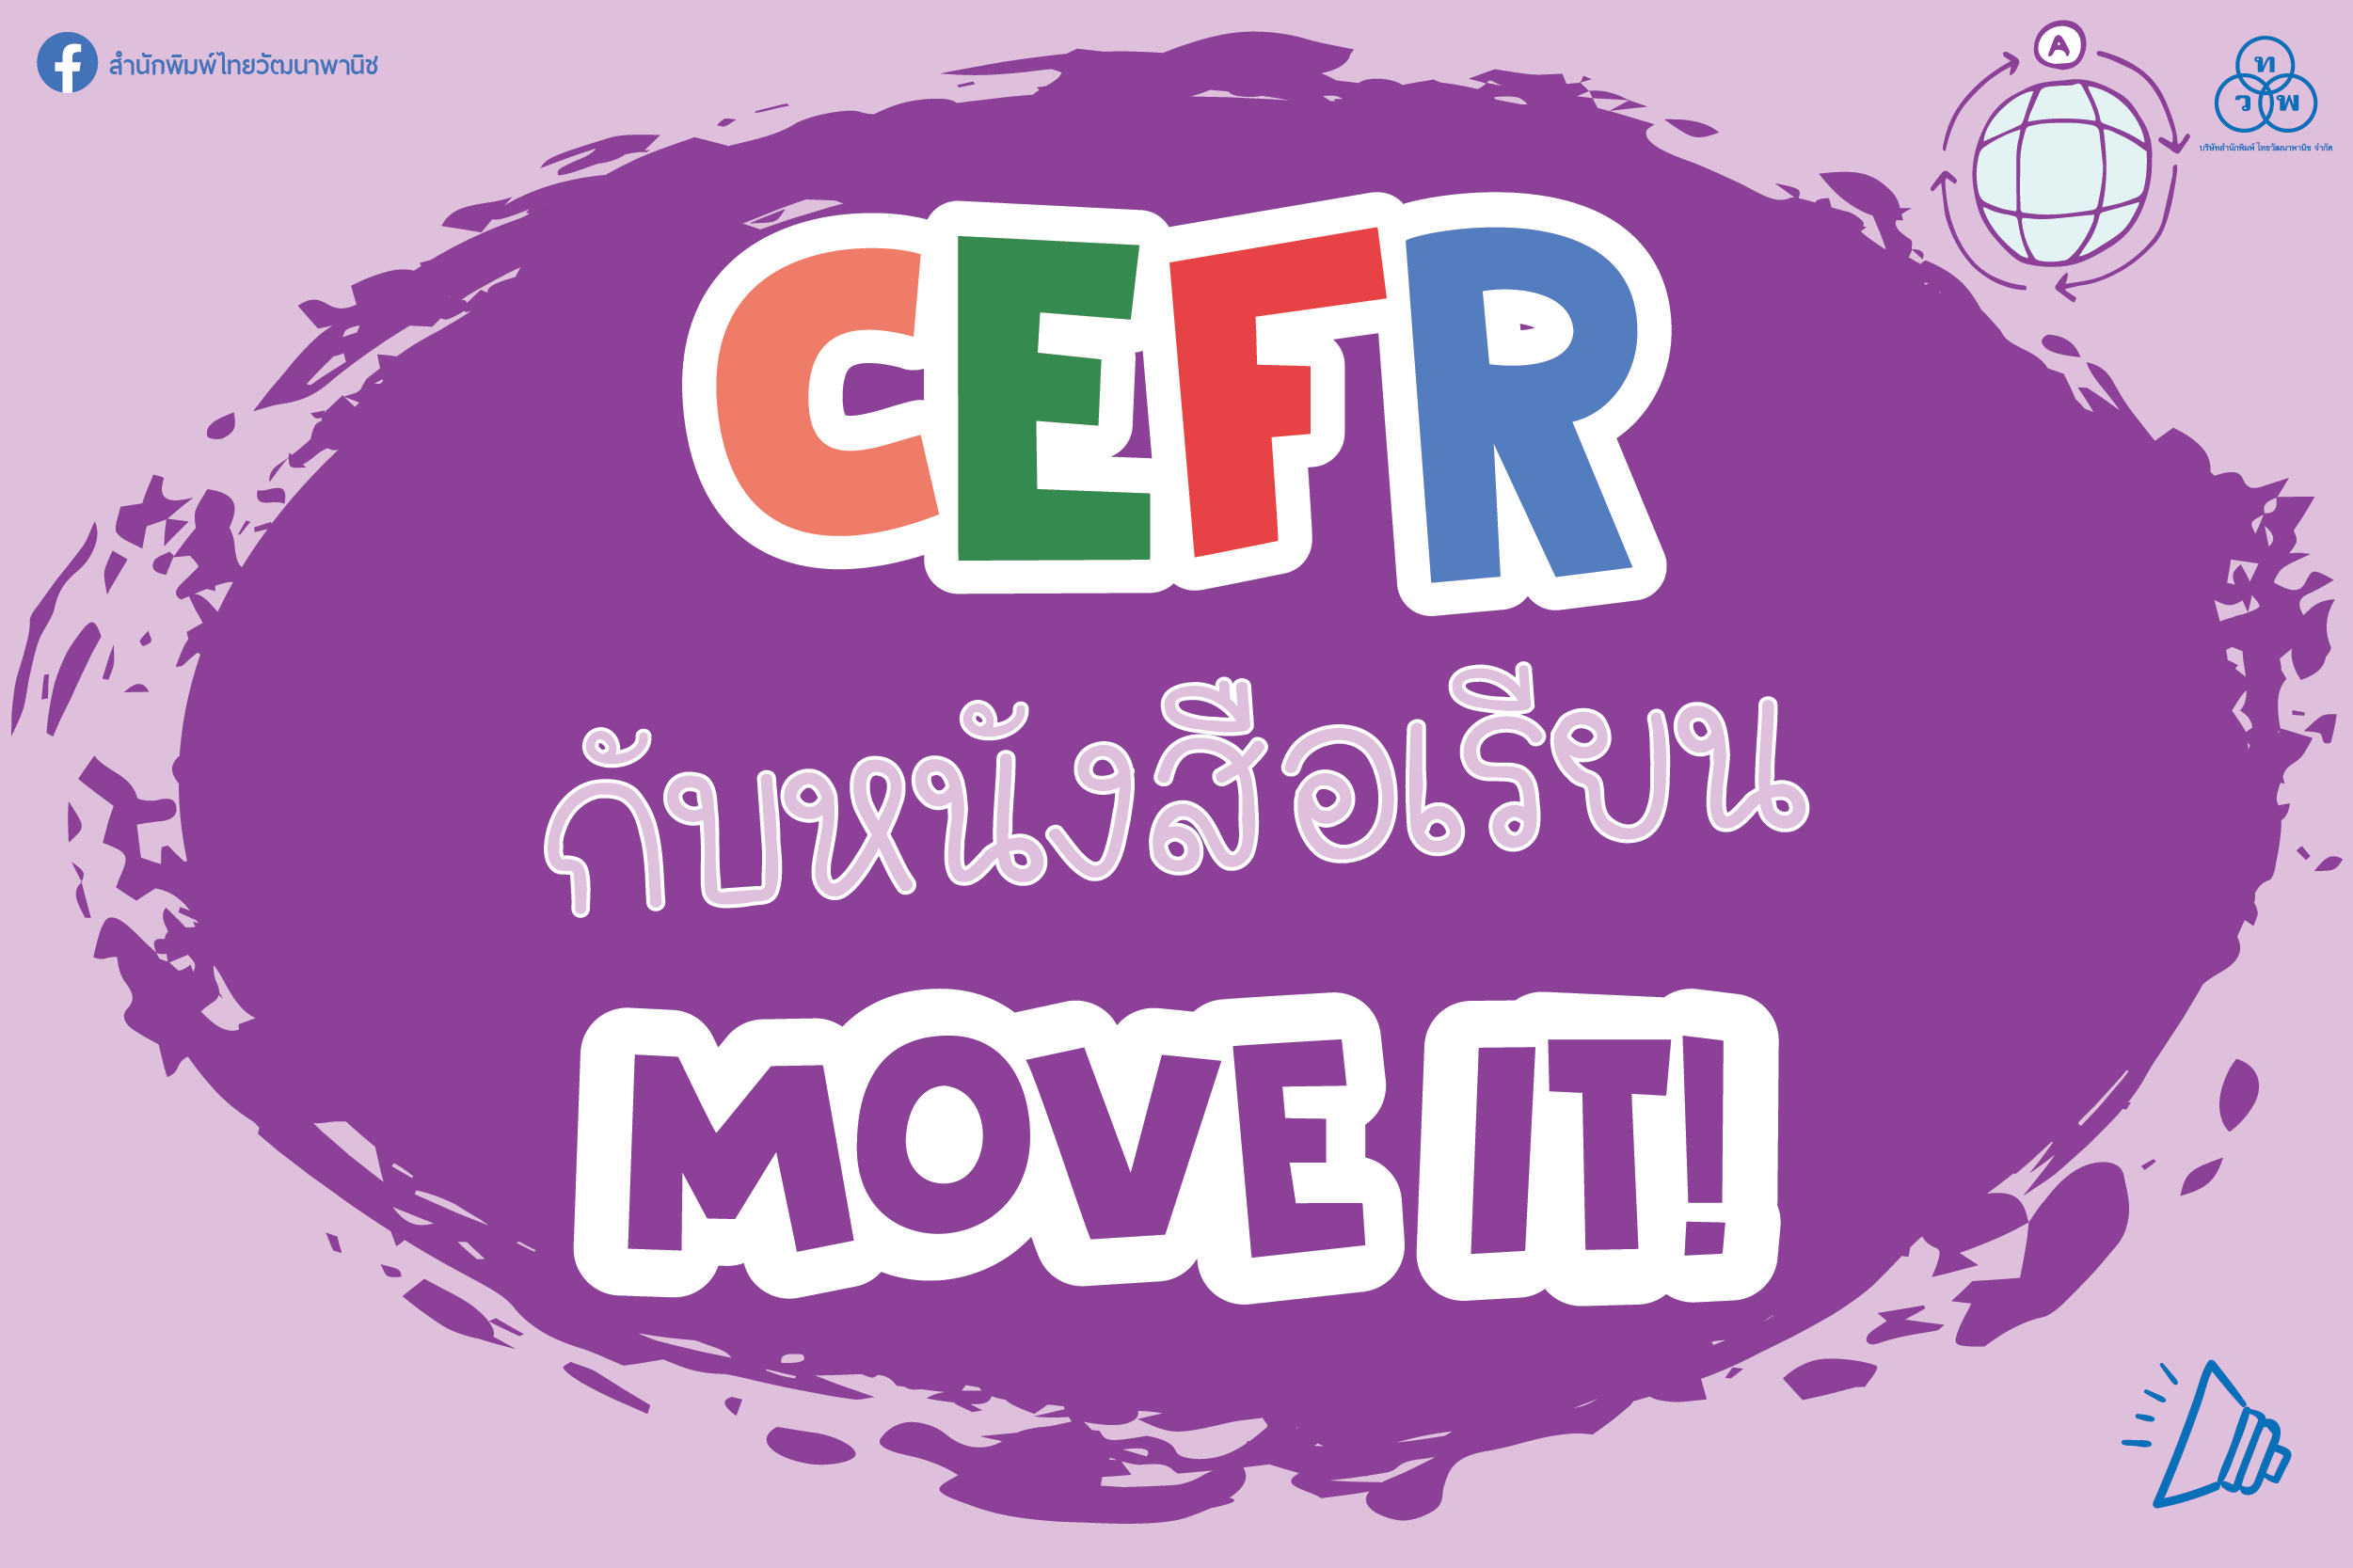 CEFR กับหนังสือเรียน Move It!